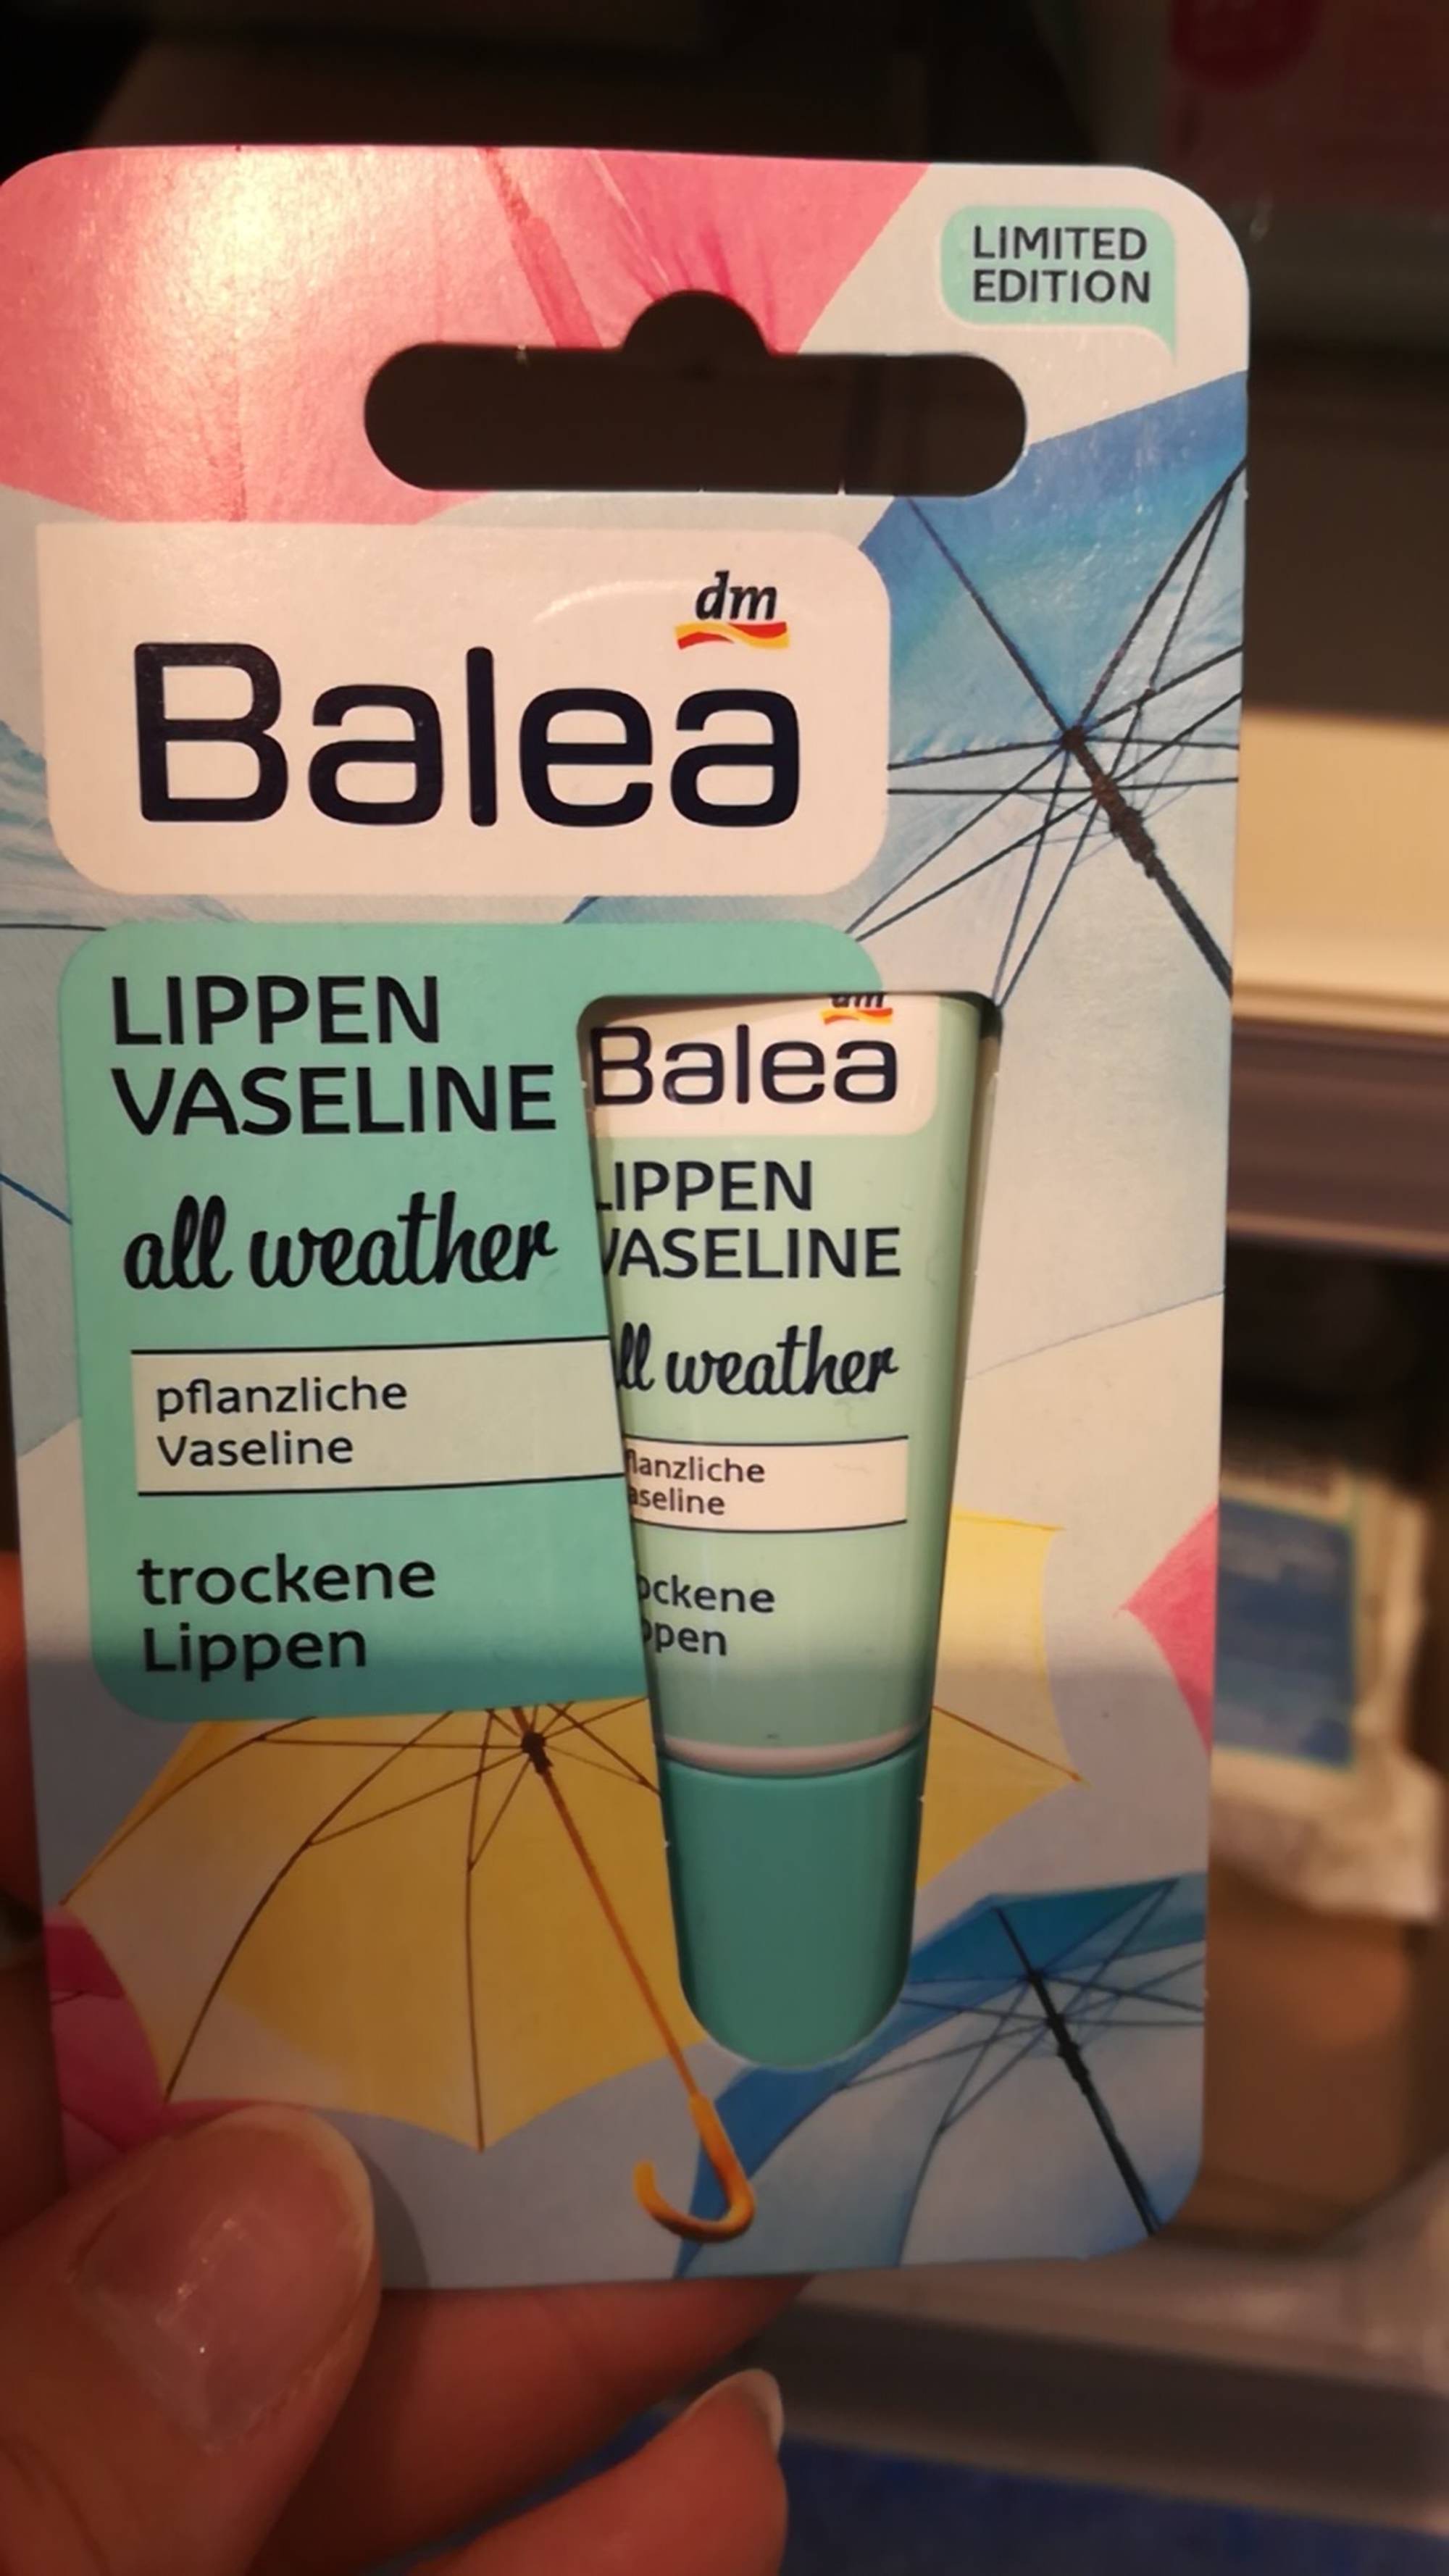 BALEA - All weather - Lippen vaseline